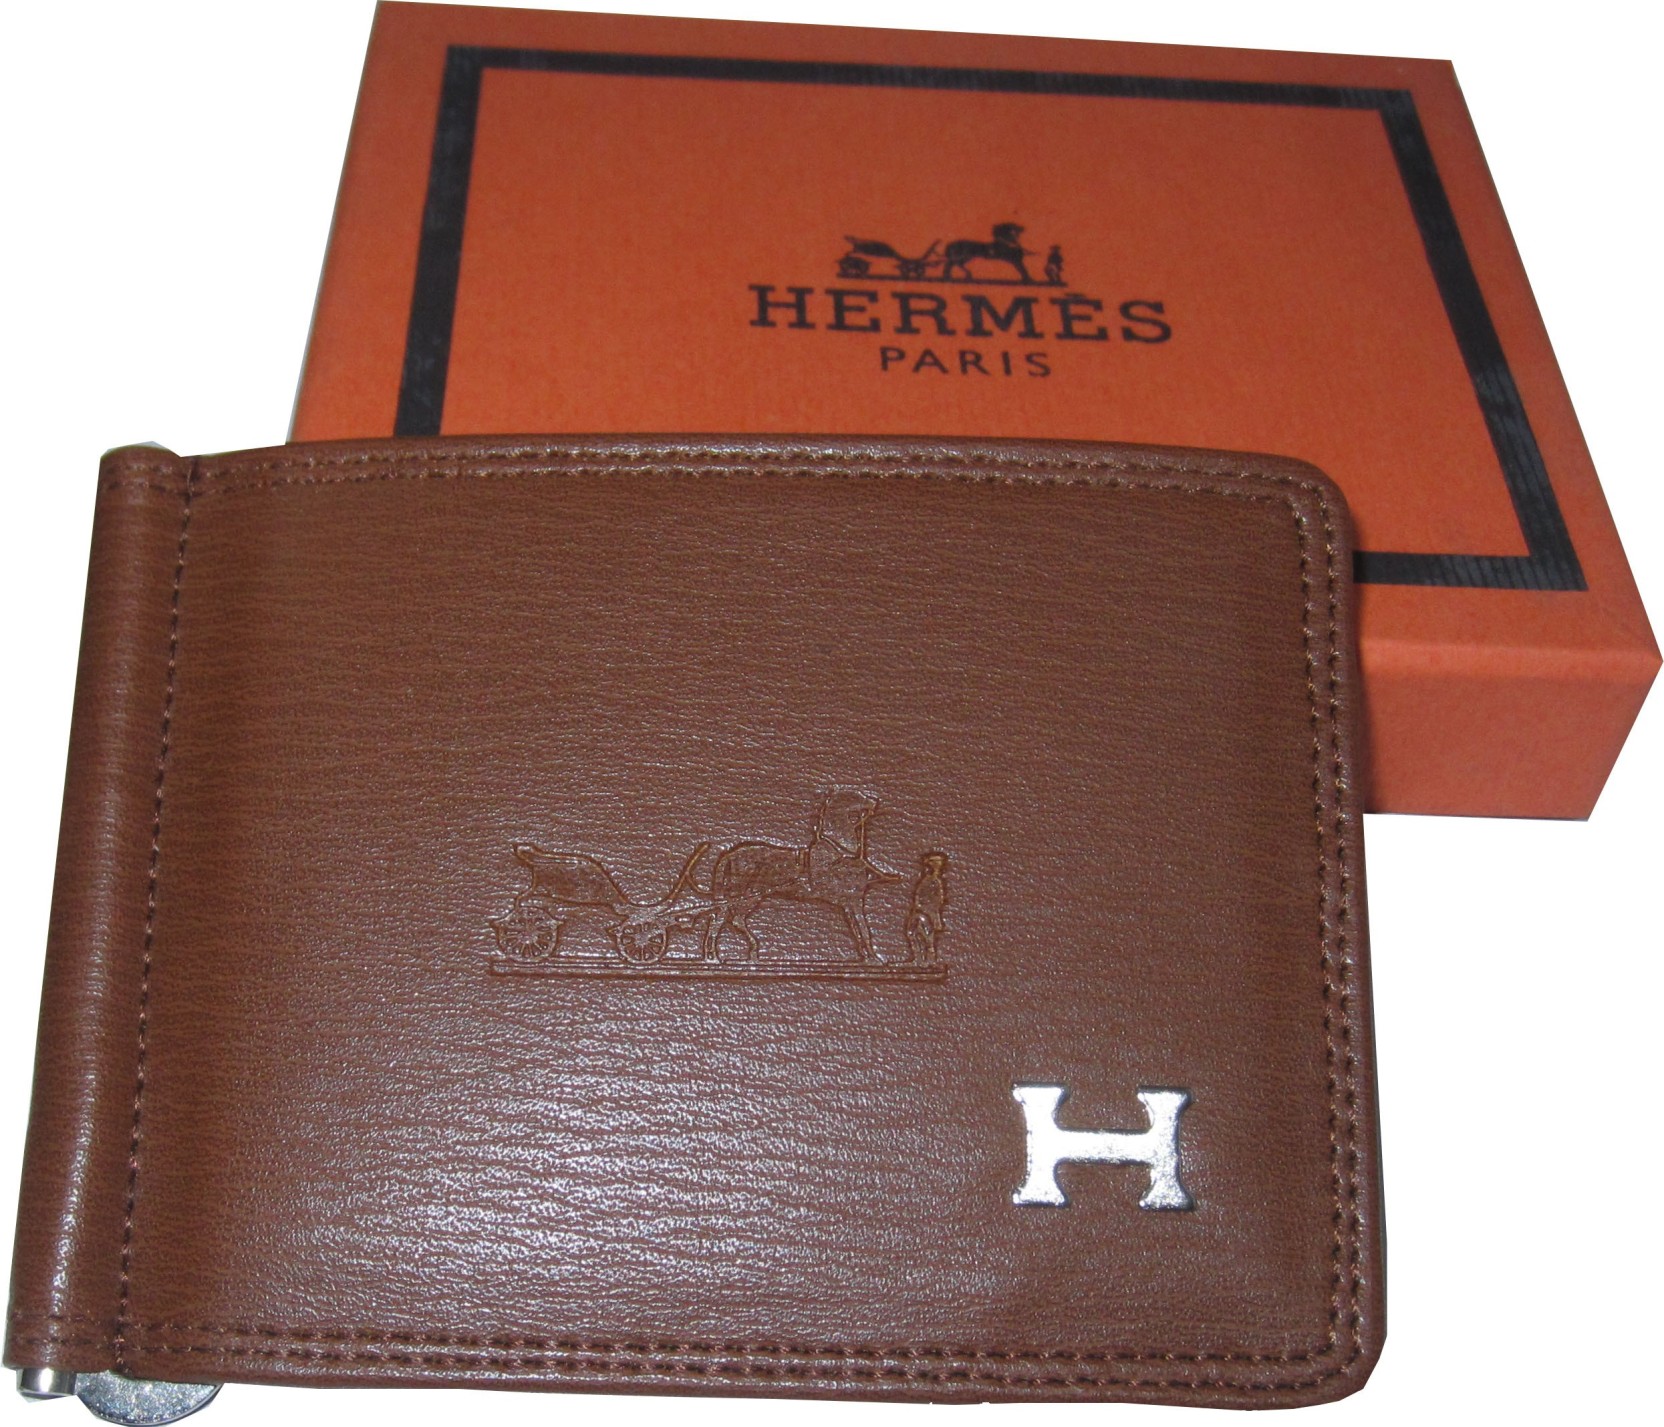 Hermes Sling Bag Price In India